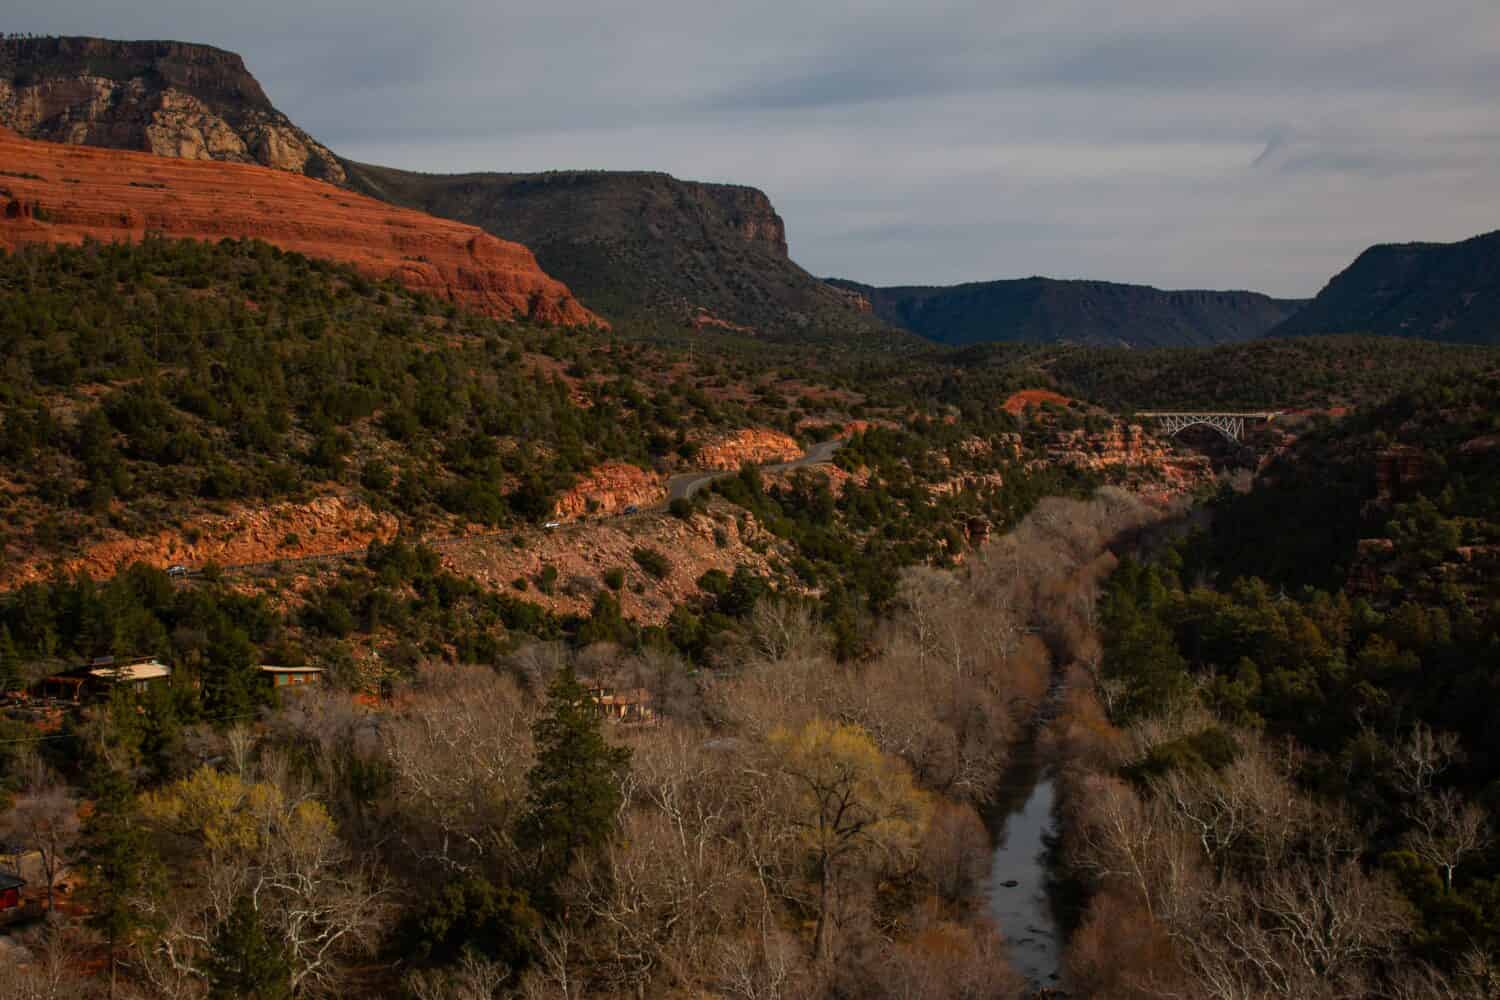 The view of Oak Creek from the Munds Wagon Trail near Sedona, Arizona, February 2020